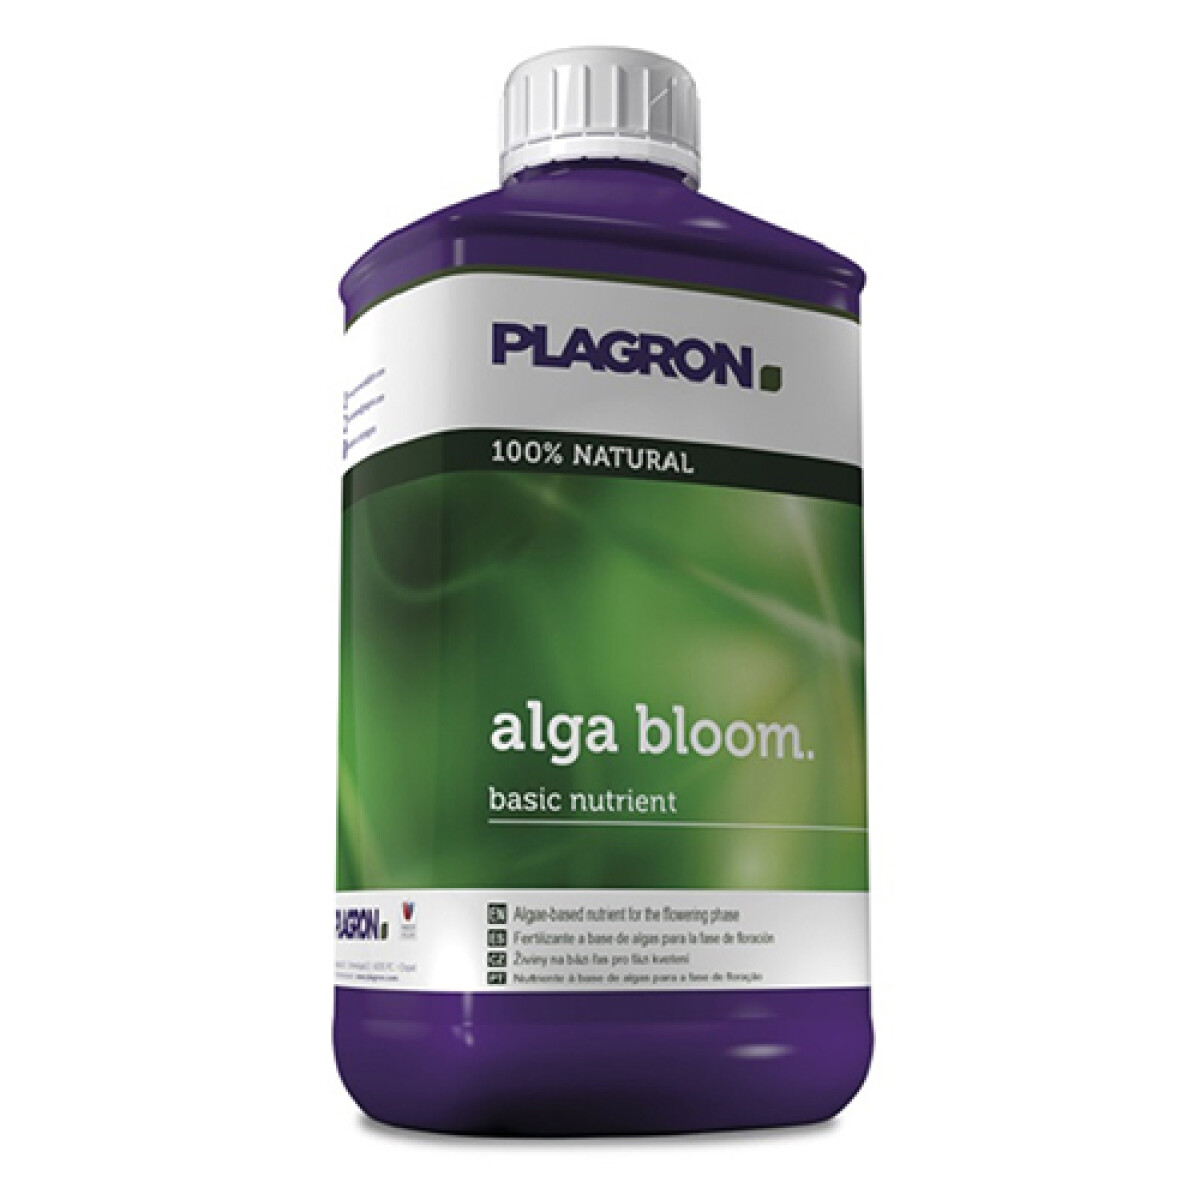 ALGA BLOOM PLAGRON - 250ML 